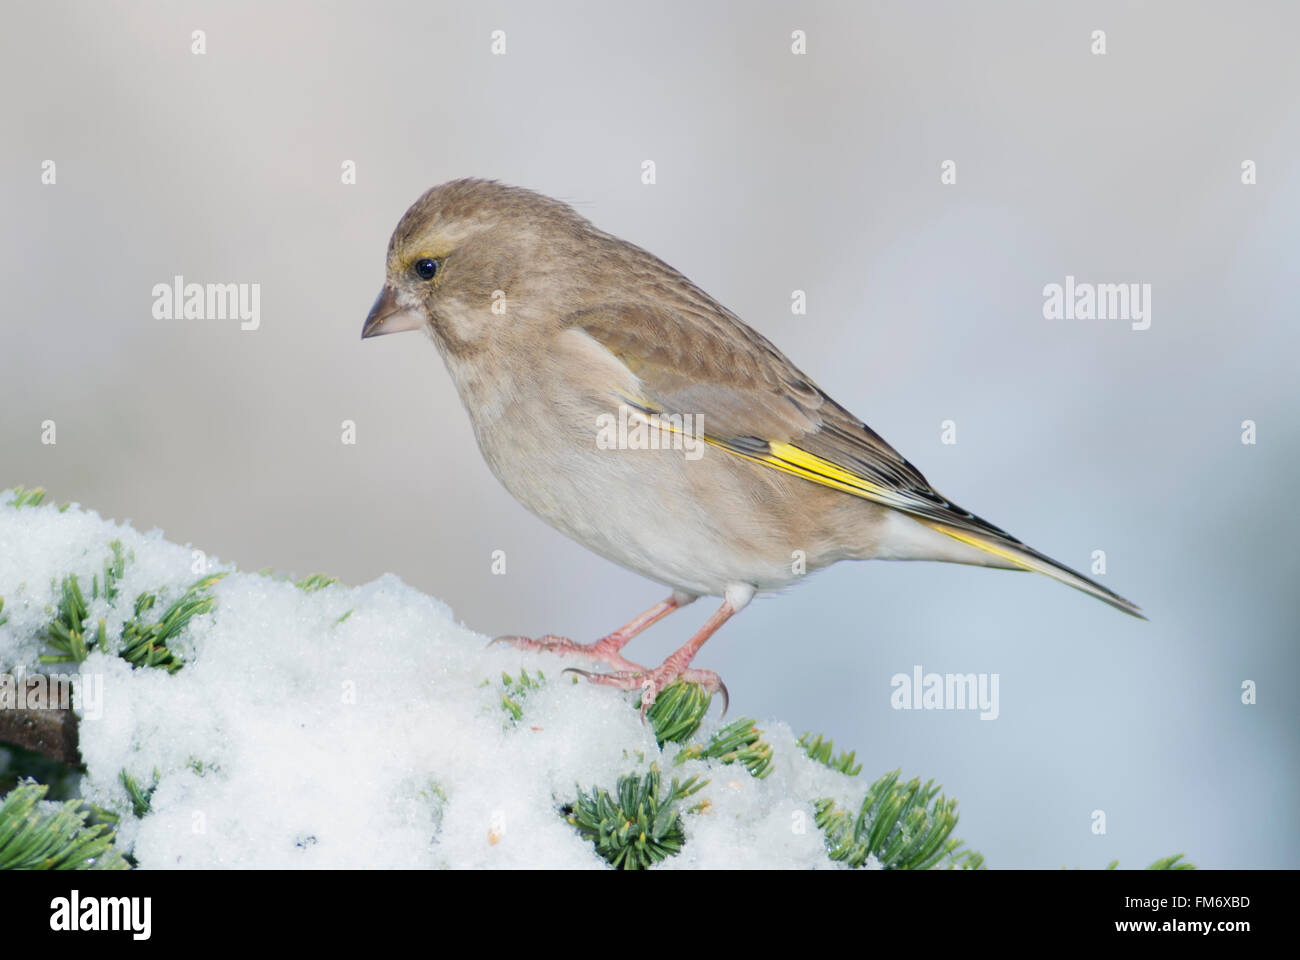 Female greenfinch on a snowy cedar branch. Stock Photo